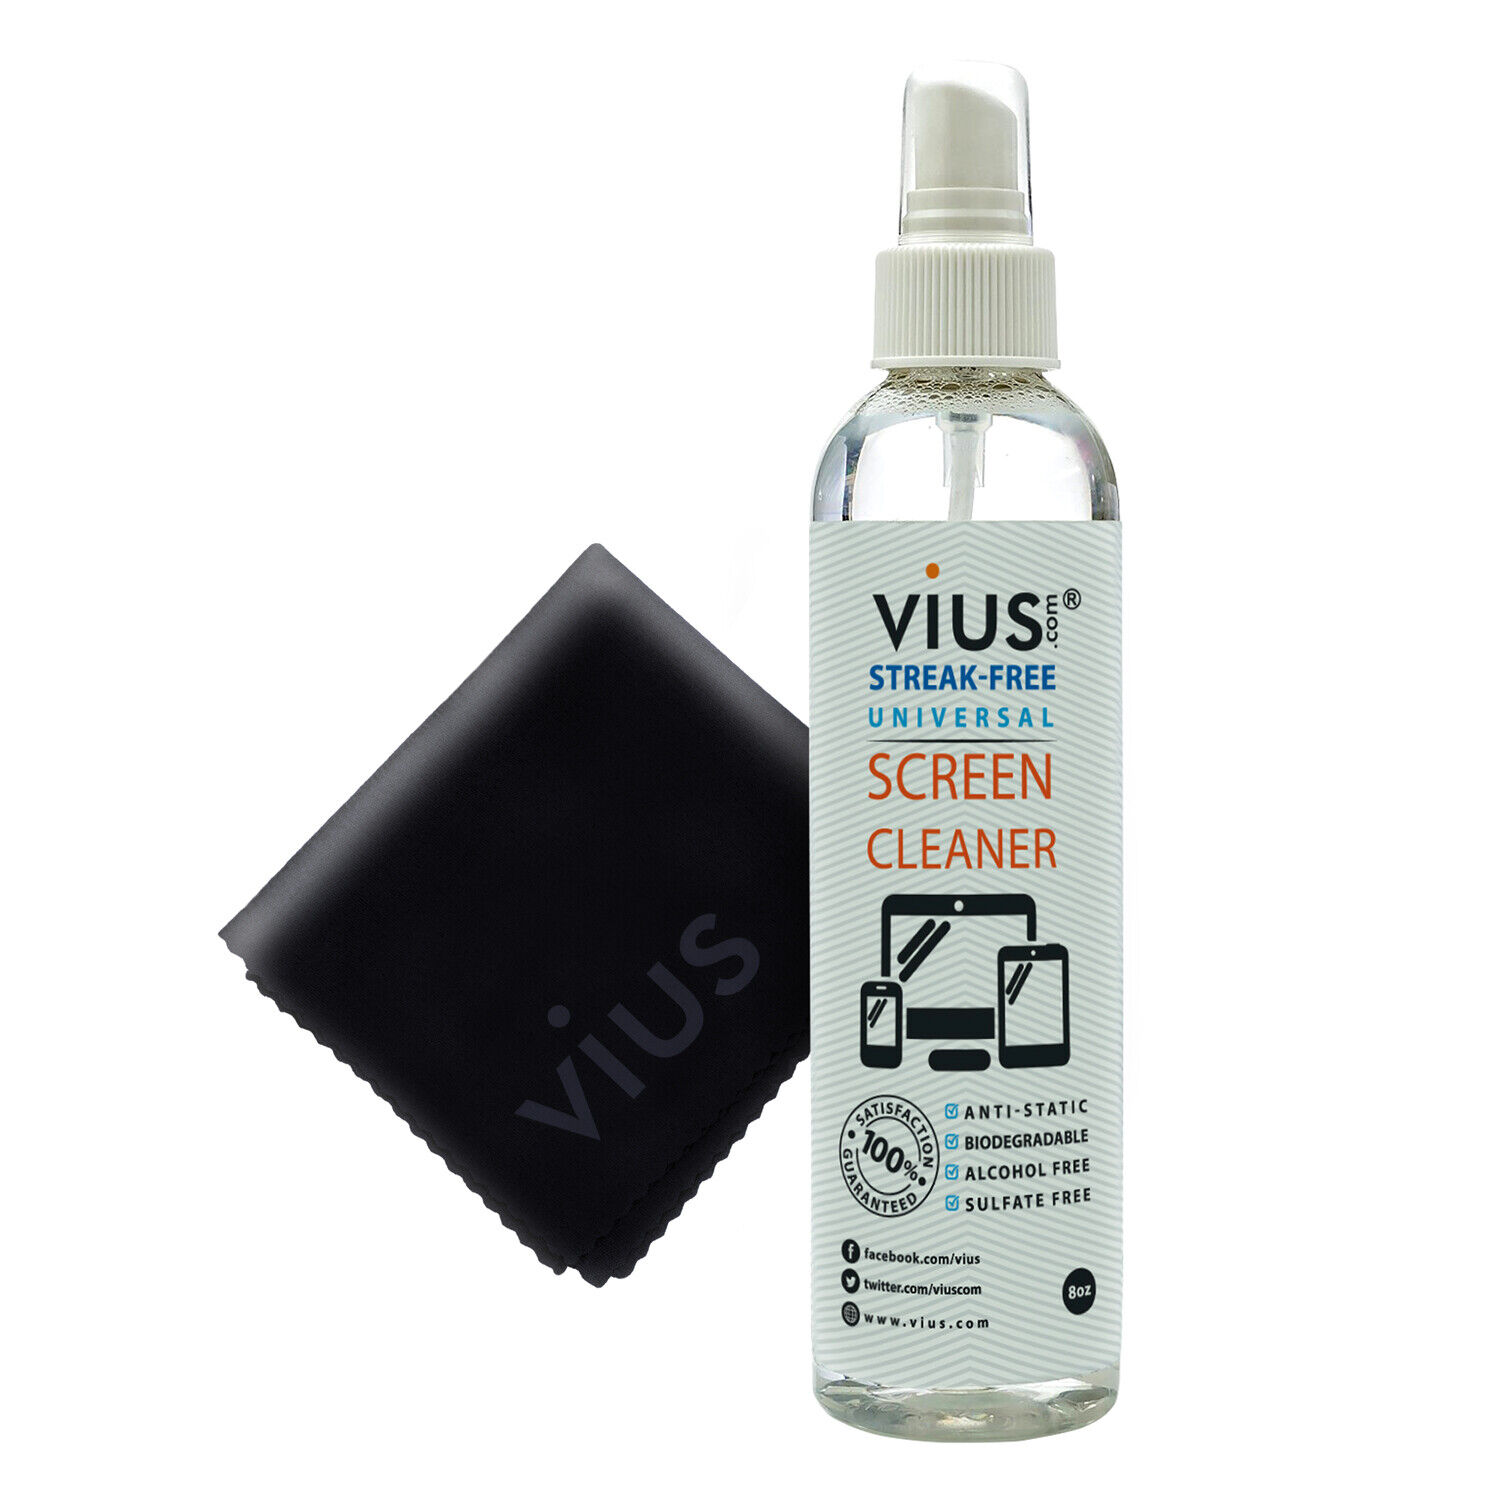 Screen Cleaner - Vius Premium Screen Cleaner Spray for LCD LED TV, Phones (8 oz)